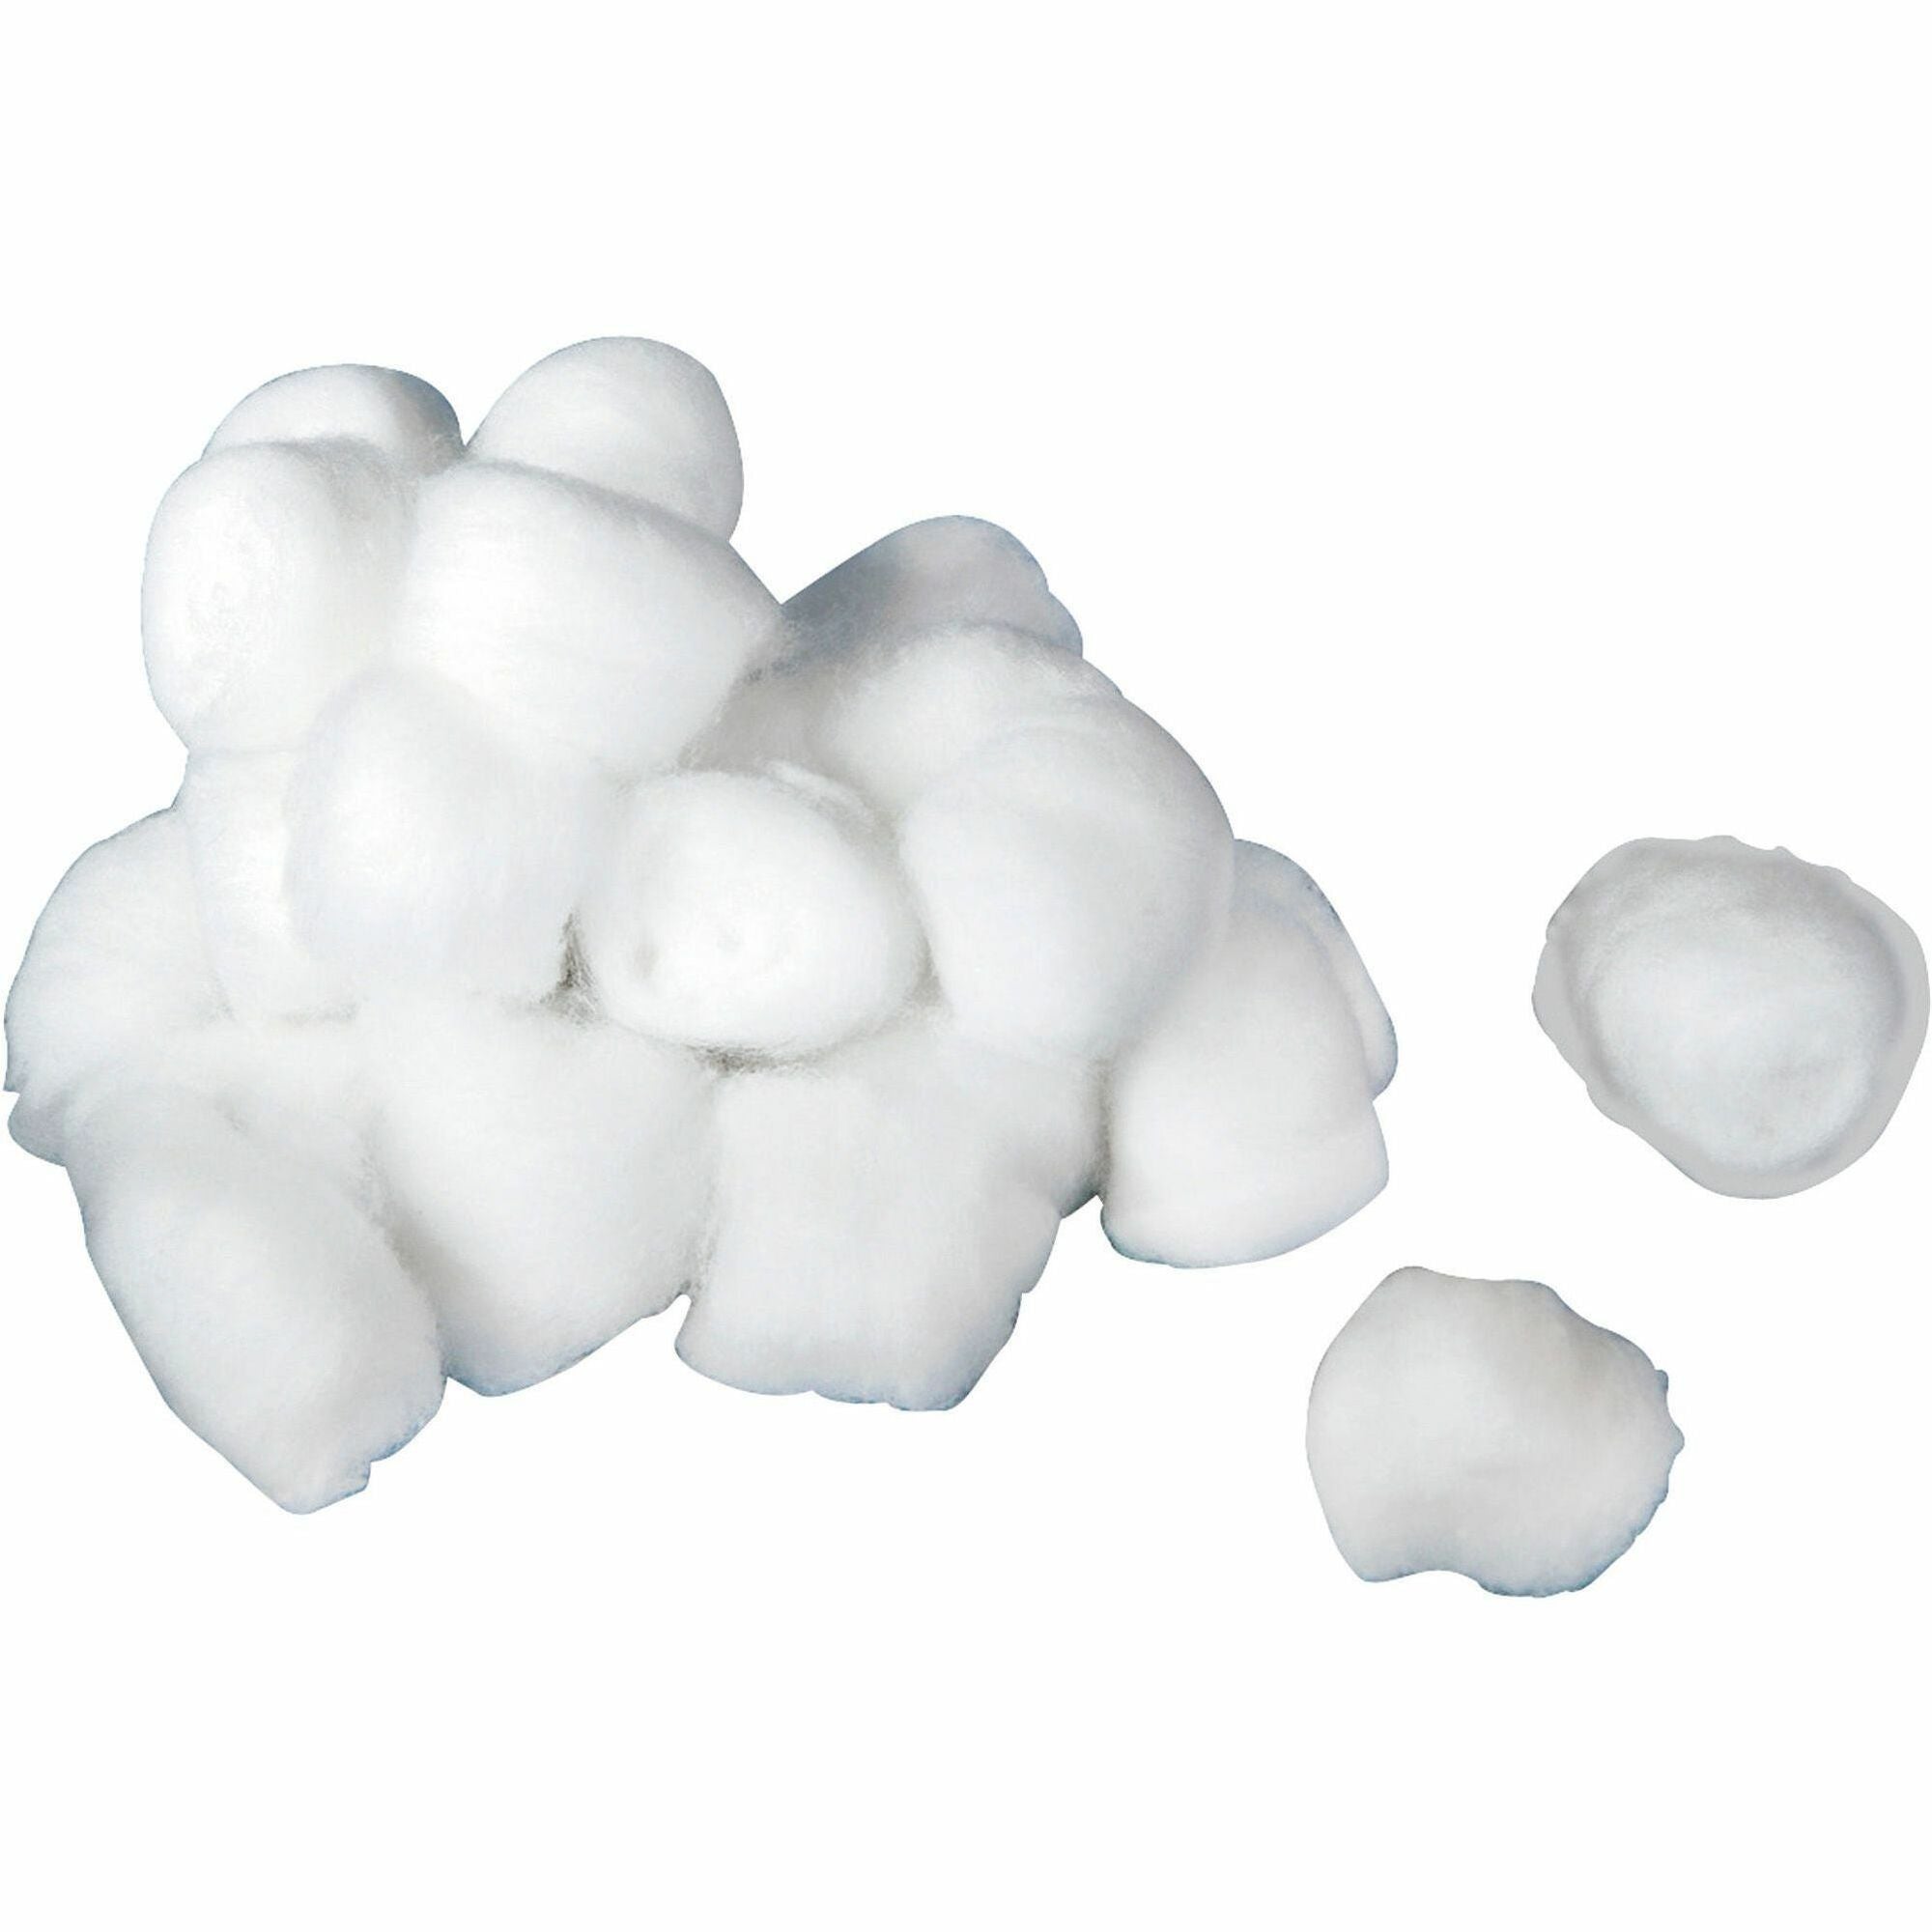 Medline Nonsterile Cotton Balls - Medium - 2000 / Pack - 100% Cotton - White - 